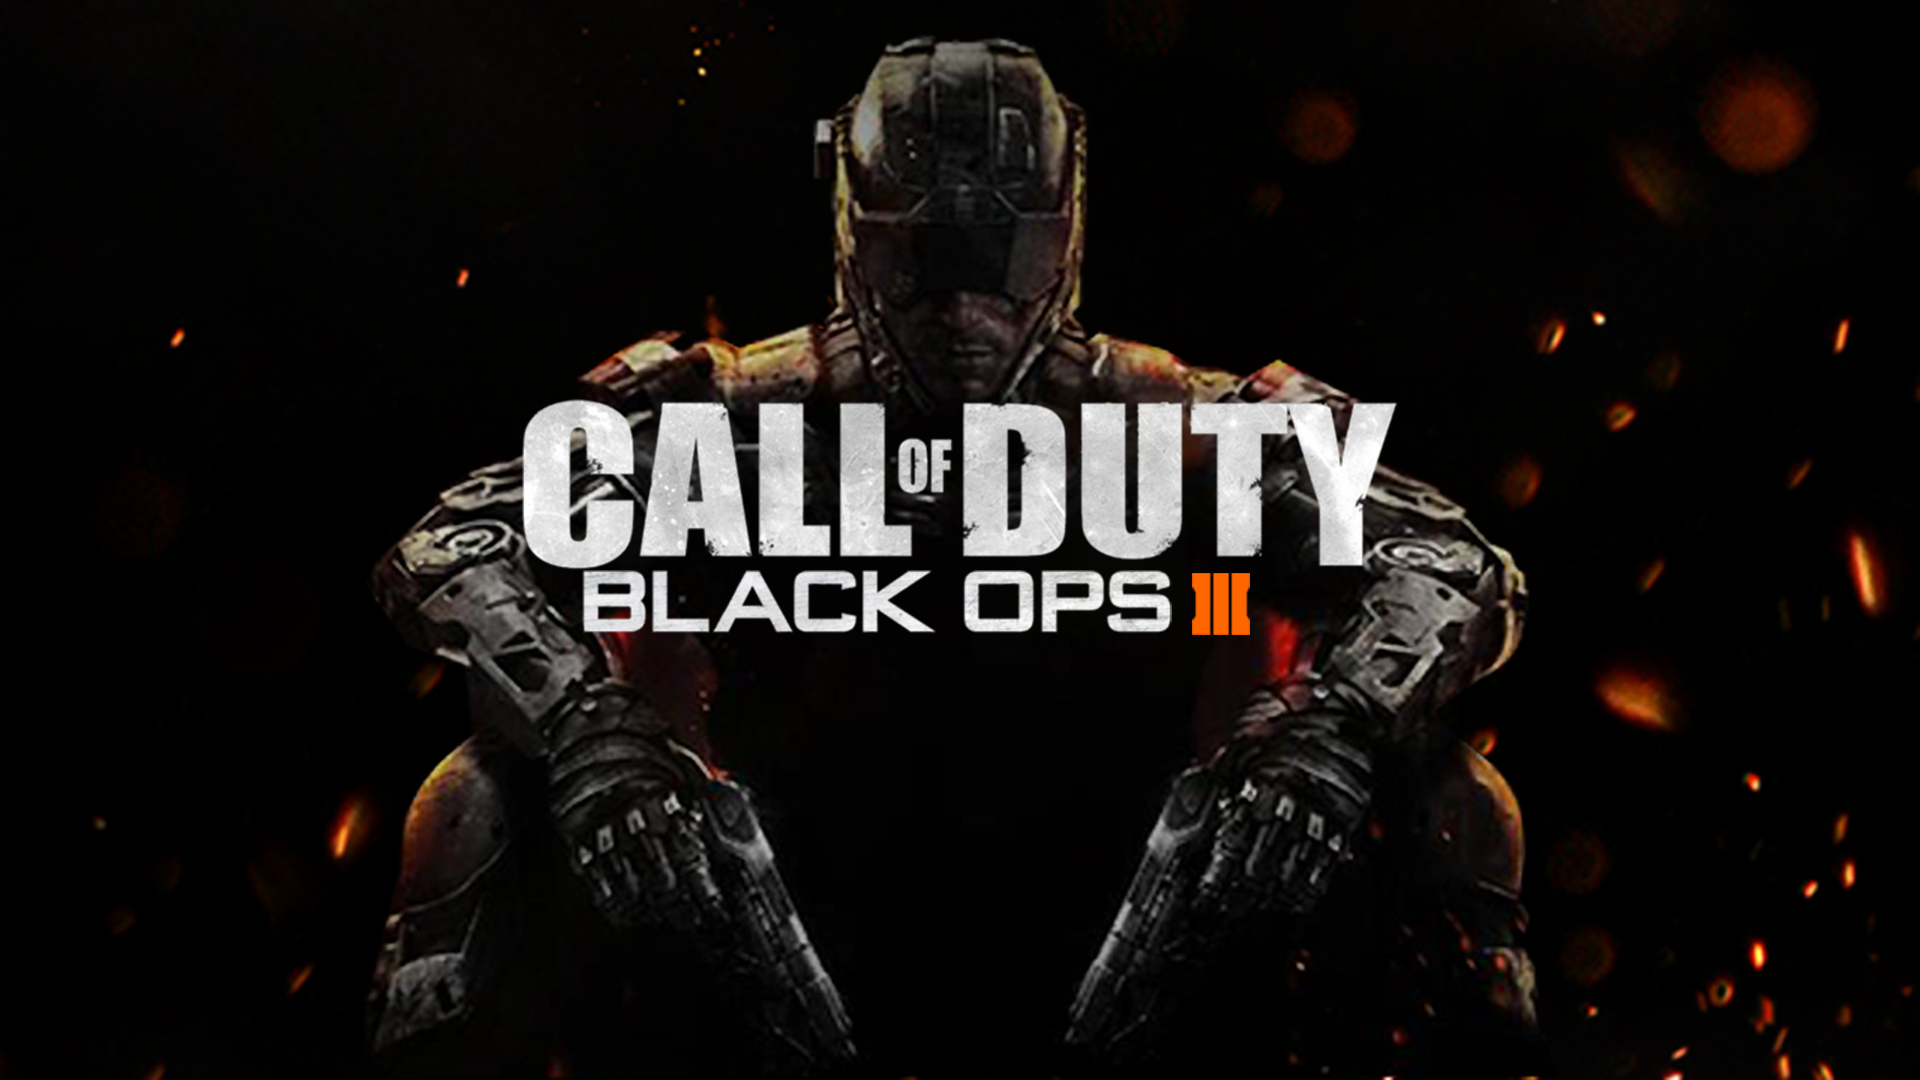 Call of Duty: Black Ops III - Windows 10 Wallpapers